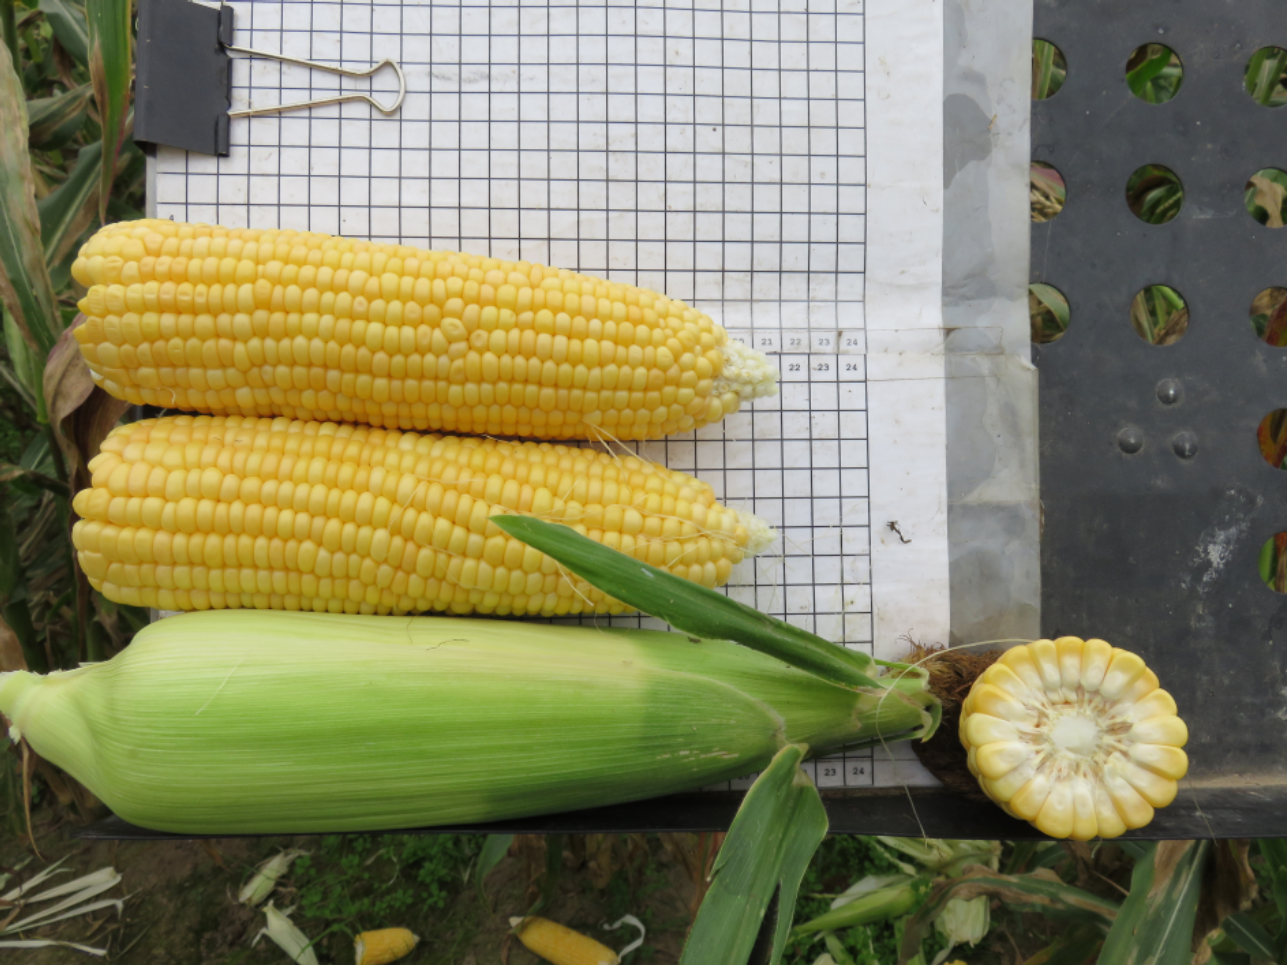 Cash Snowy River Seeds Sweet Corn Ears in Field being measured